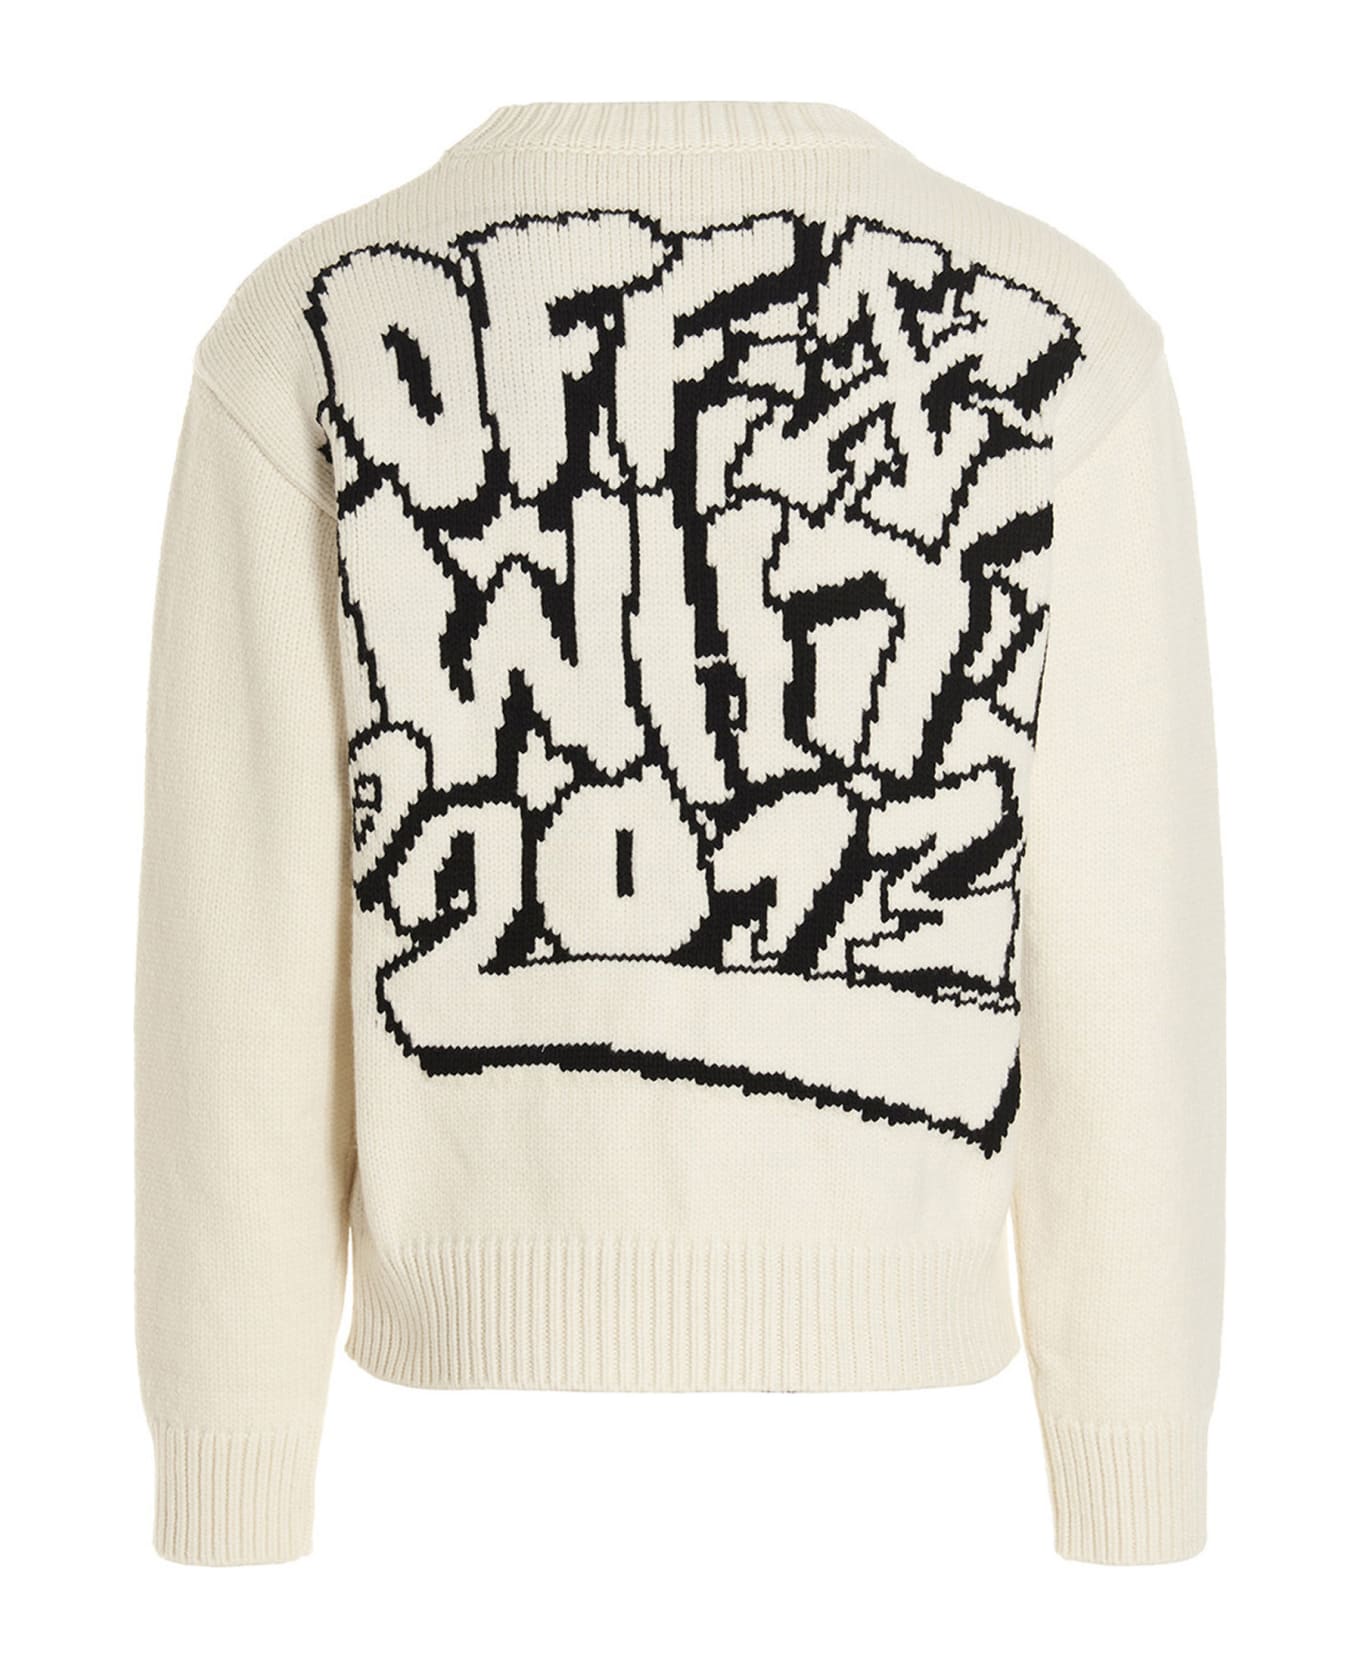 Off-White 'crew' Sweater - White/Black